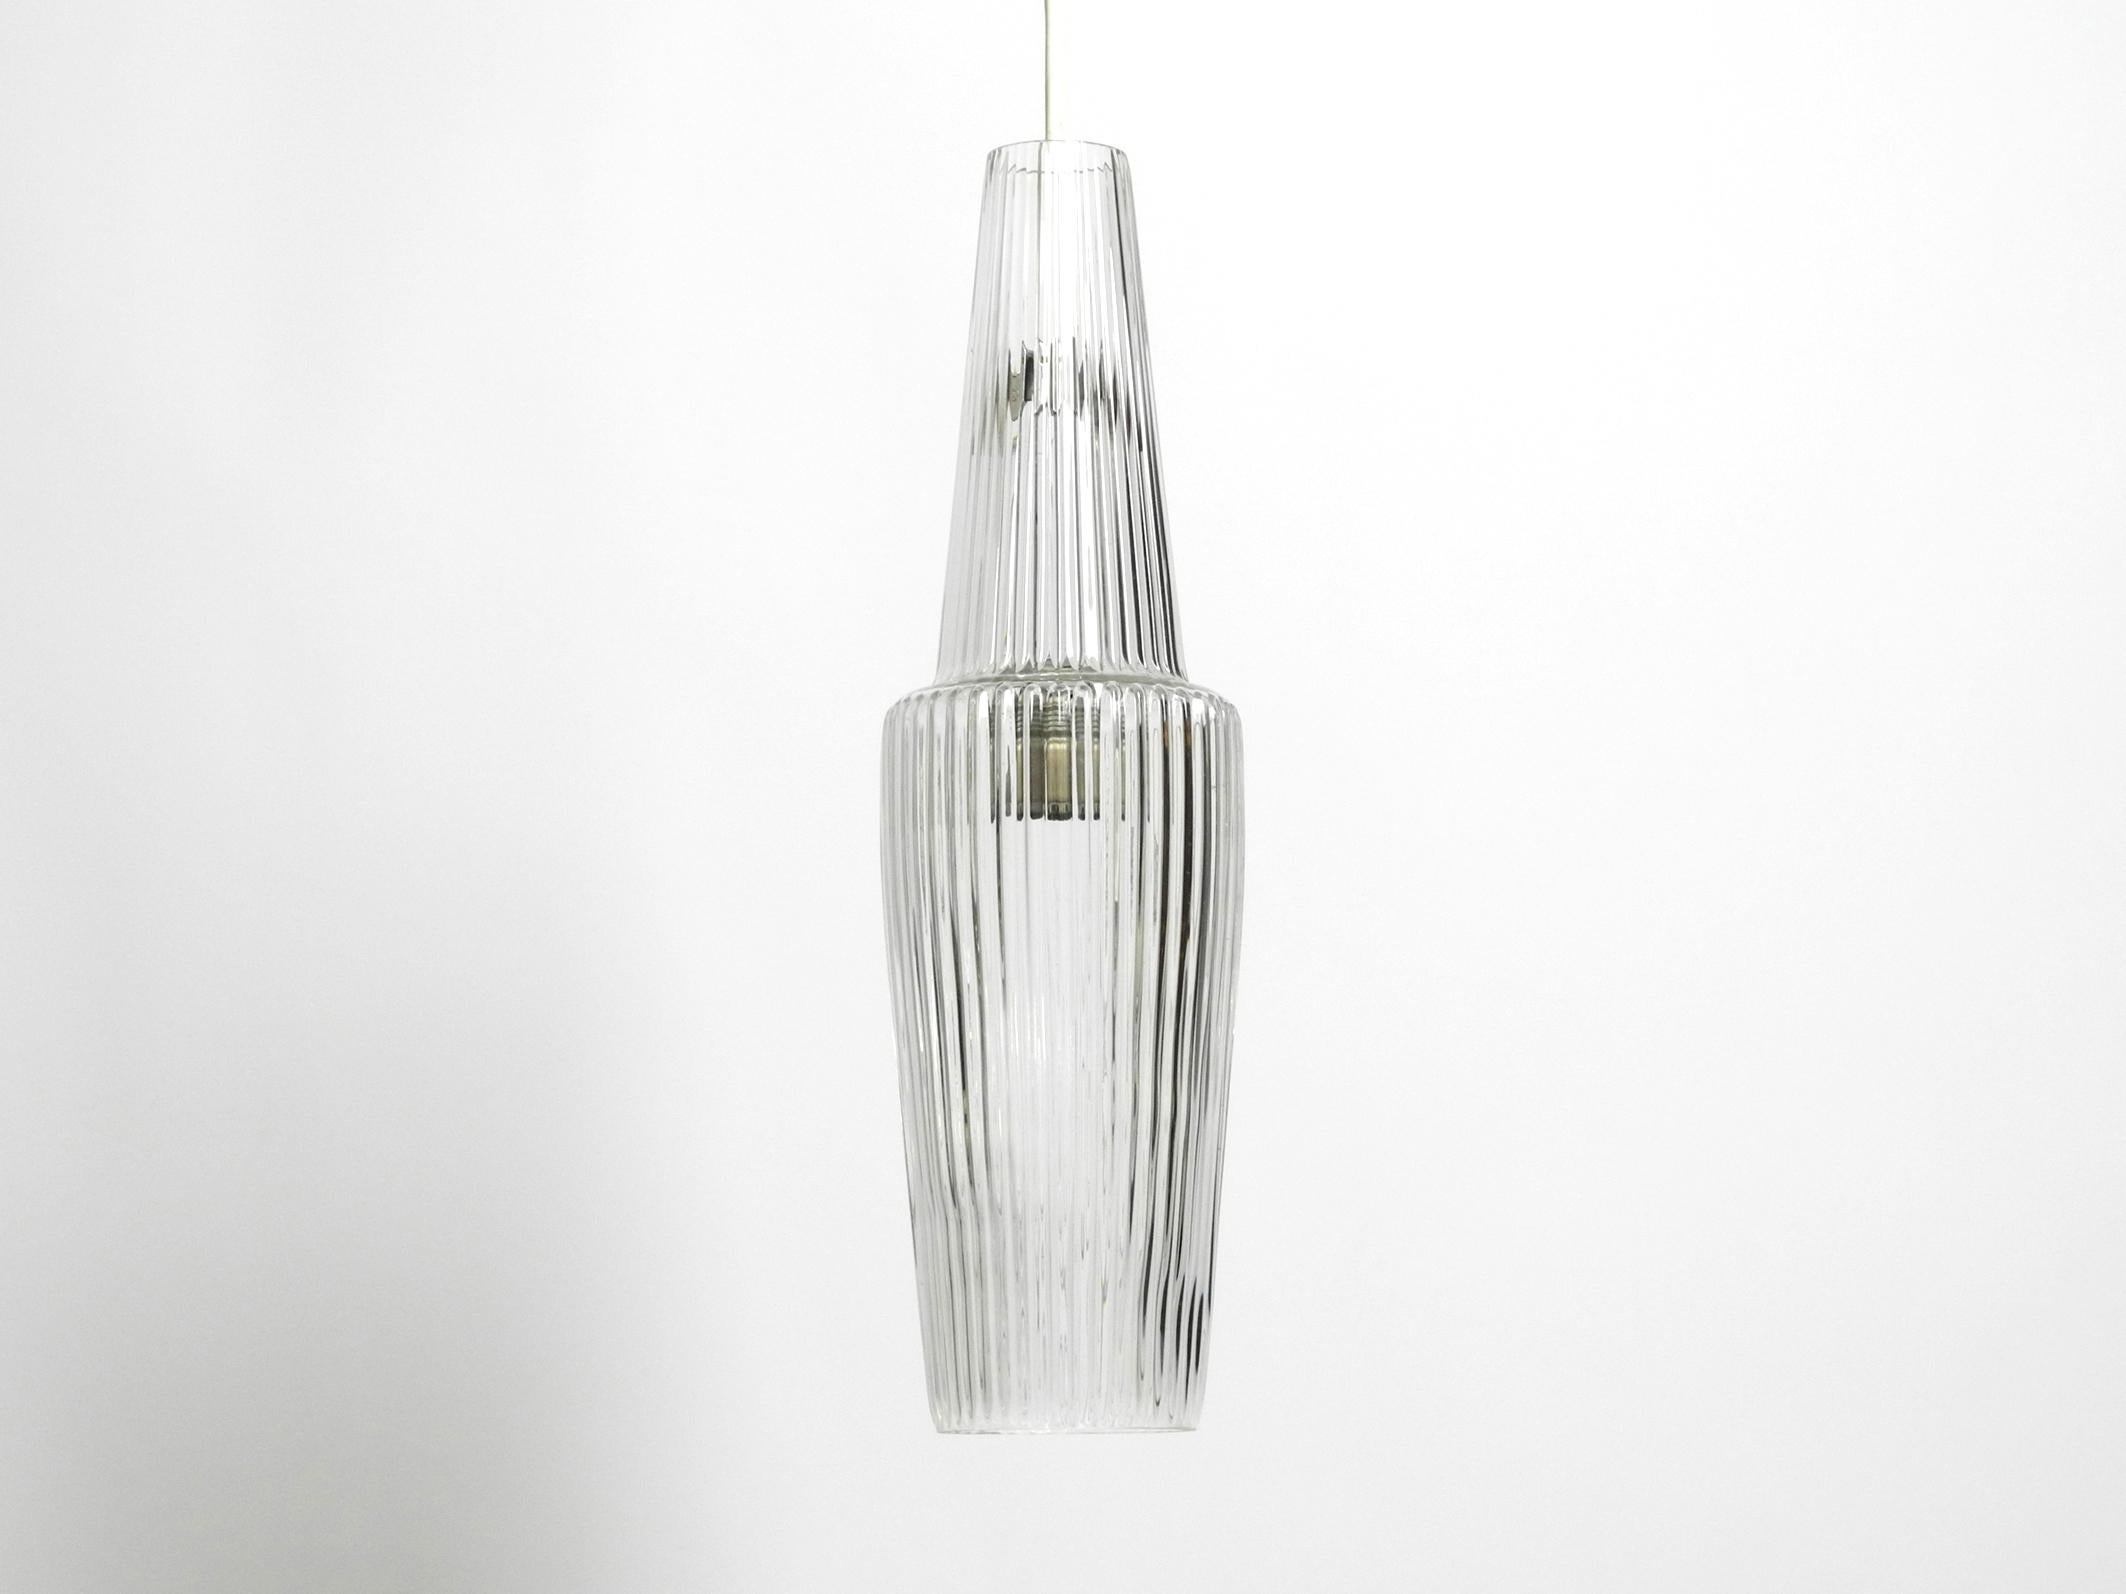 Rare original hand-blown crystal glass pendant lamp 'Pisa' by Aloys Ferdinand Gangkofner.
Manufactured by Peill & Putzler. An original from 1952. Made in Germany.
Beautiful minimalist Mid Century design.
The lamp is an original from the 1950s and